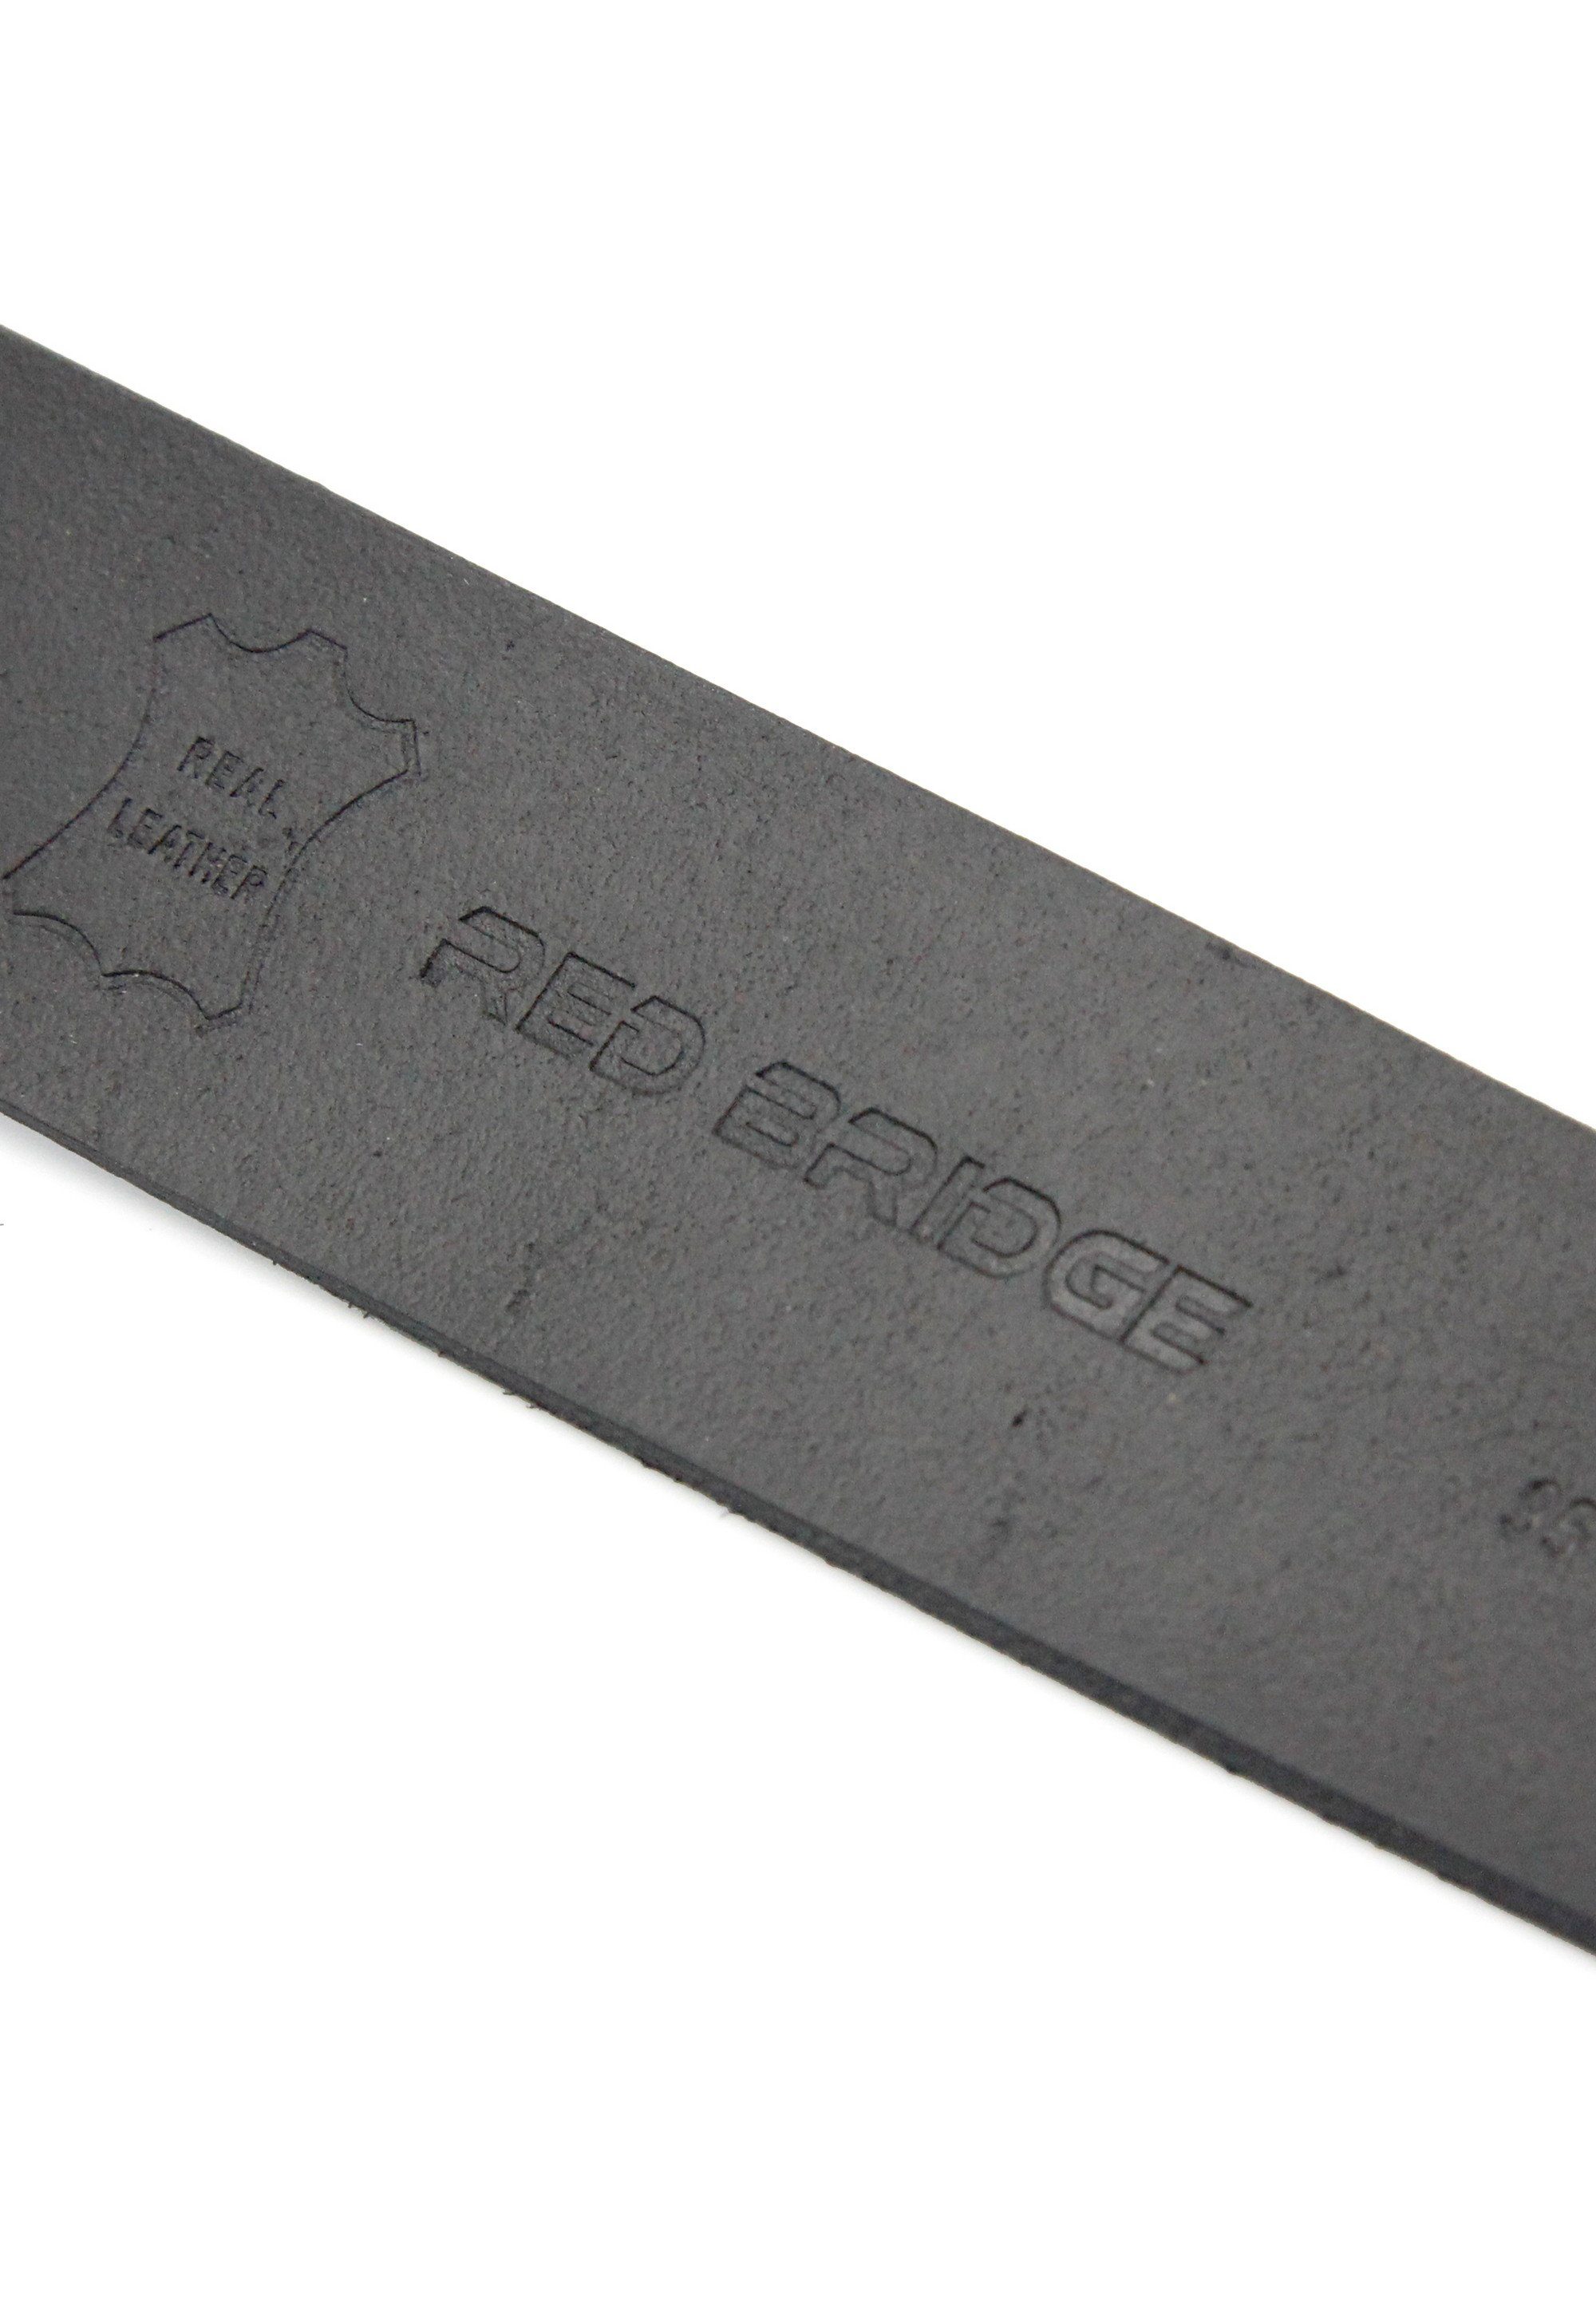 RedBridge Ledergürtel Frisco Design in dunkelblau schlichtem